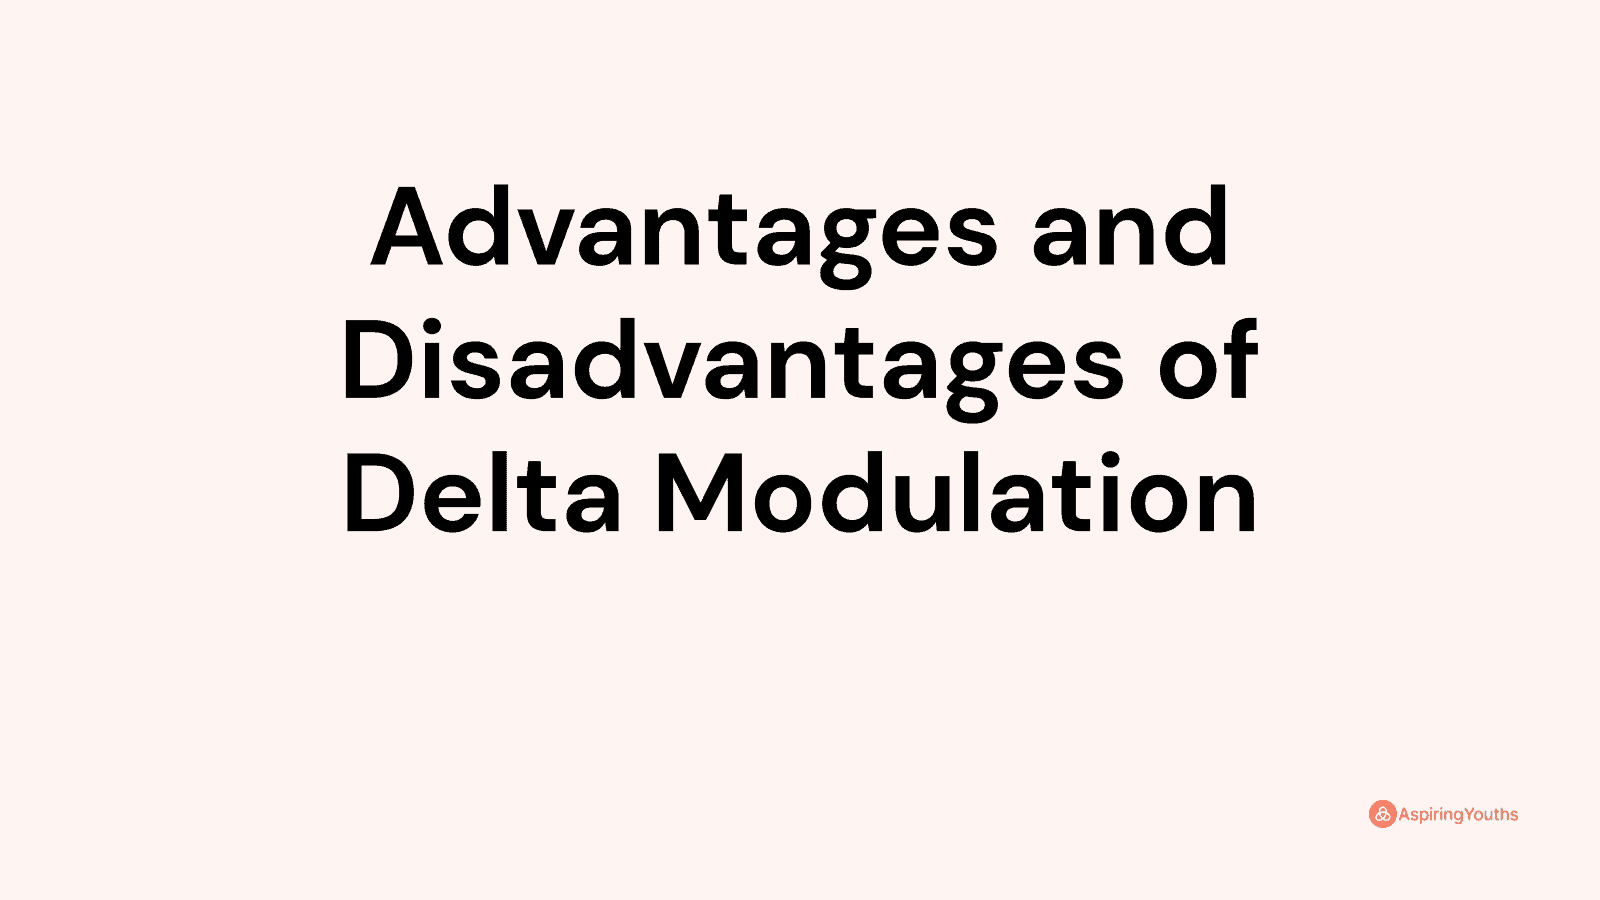 Advantages and disadvantages of Delta Modulation